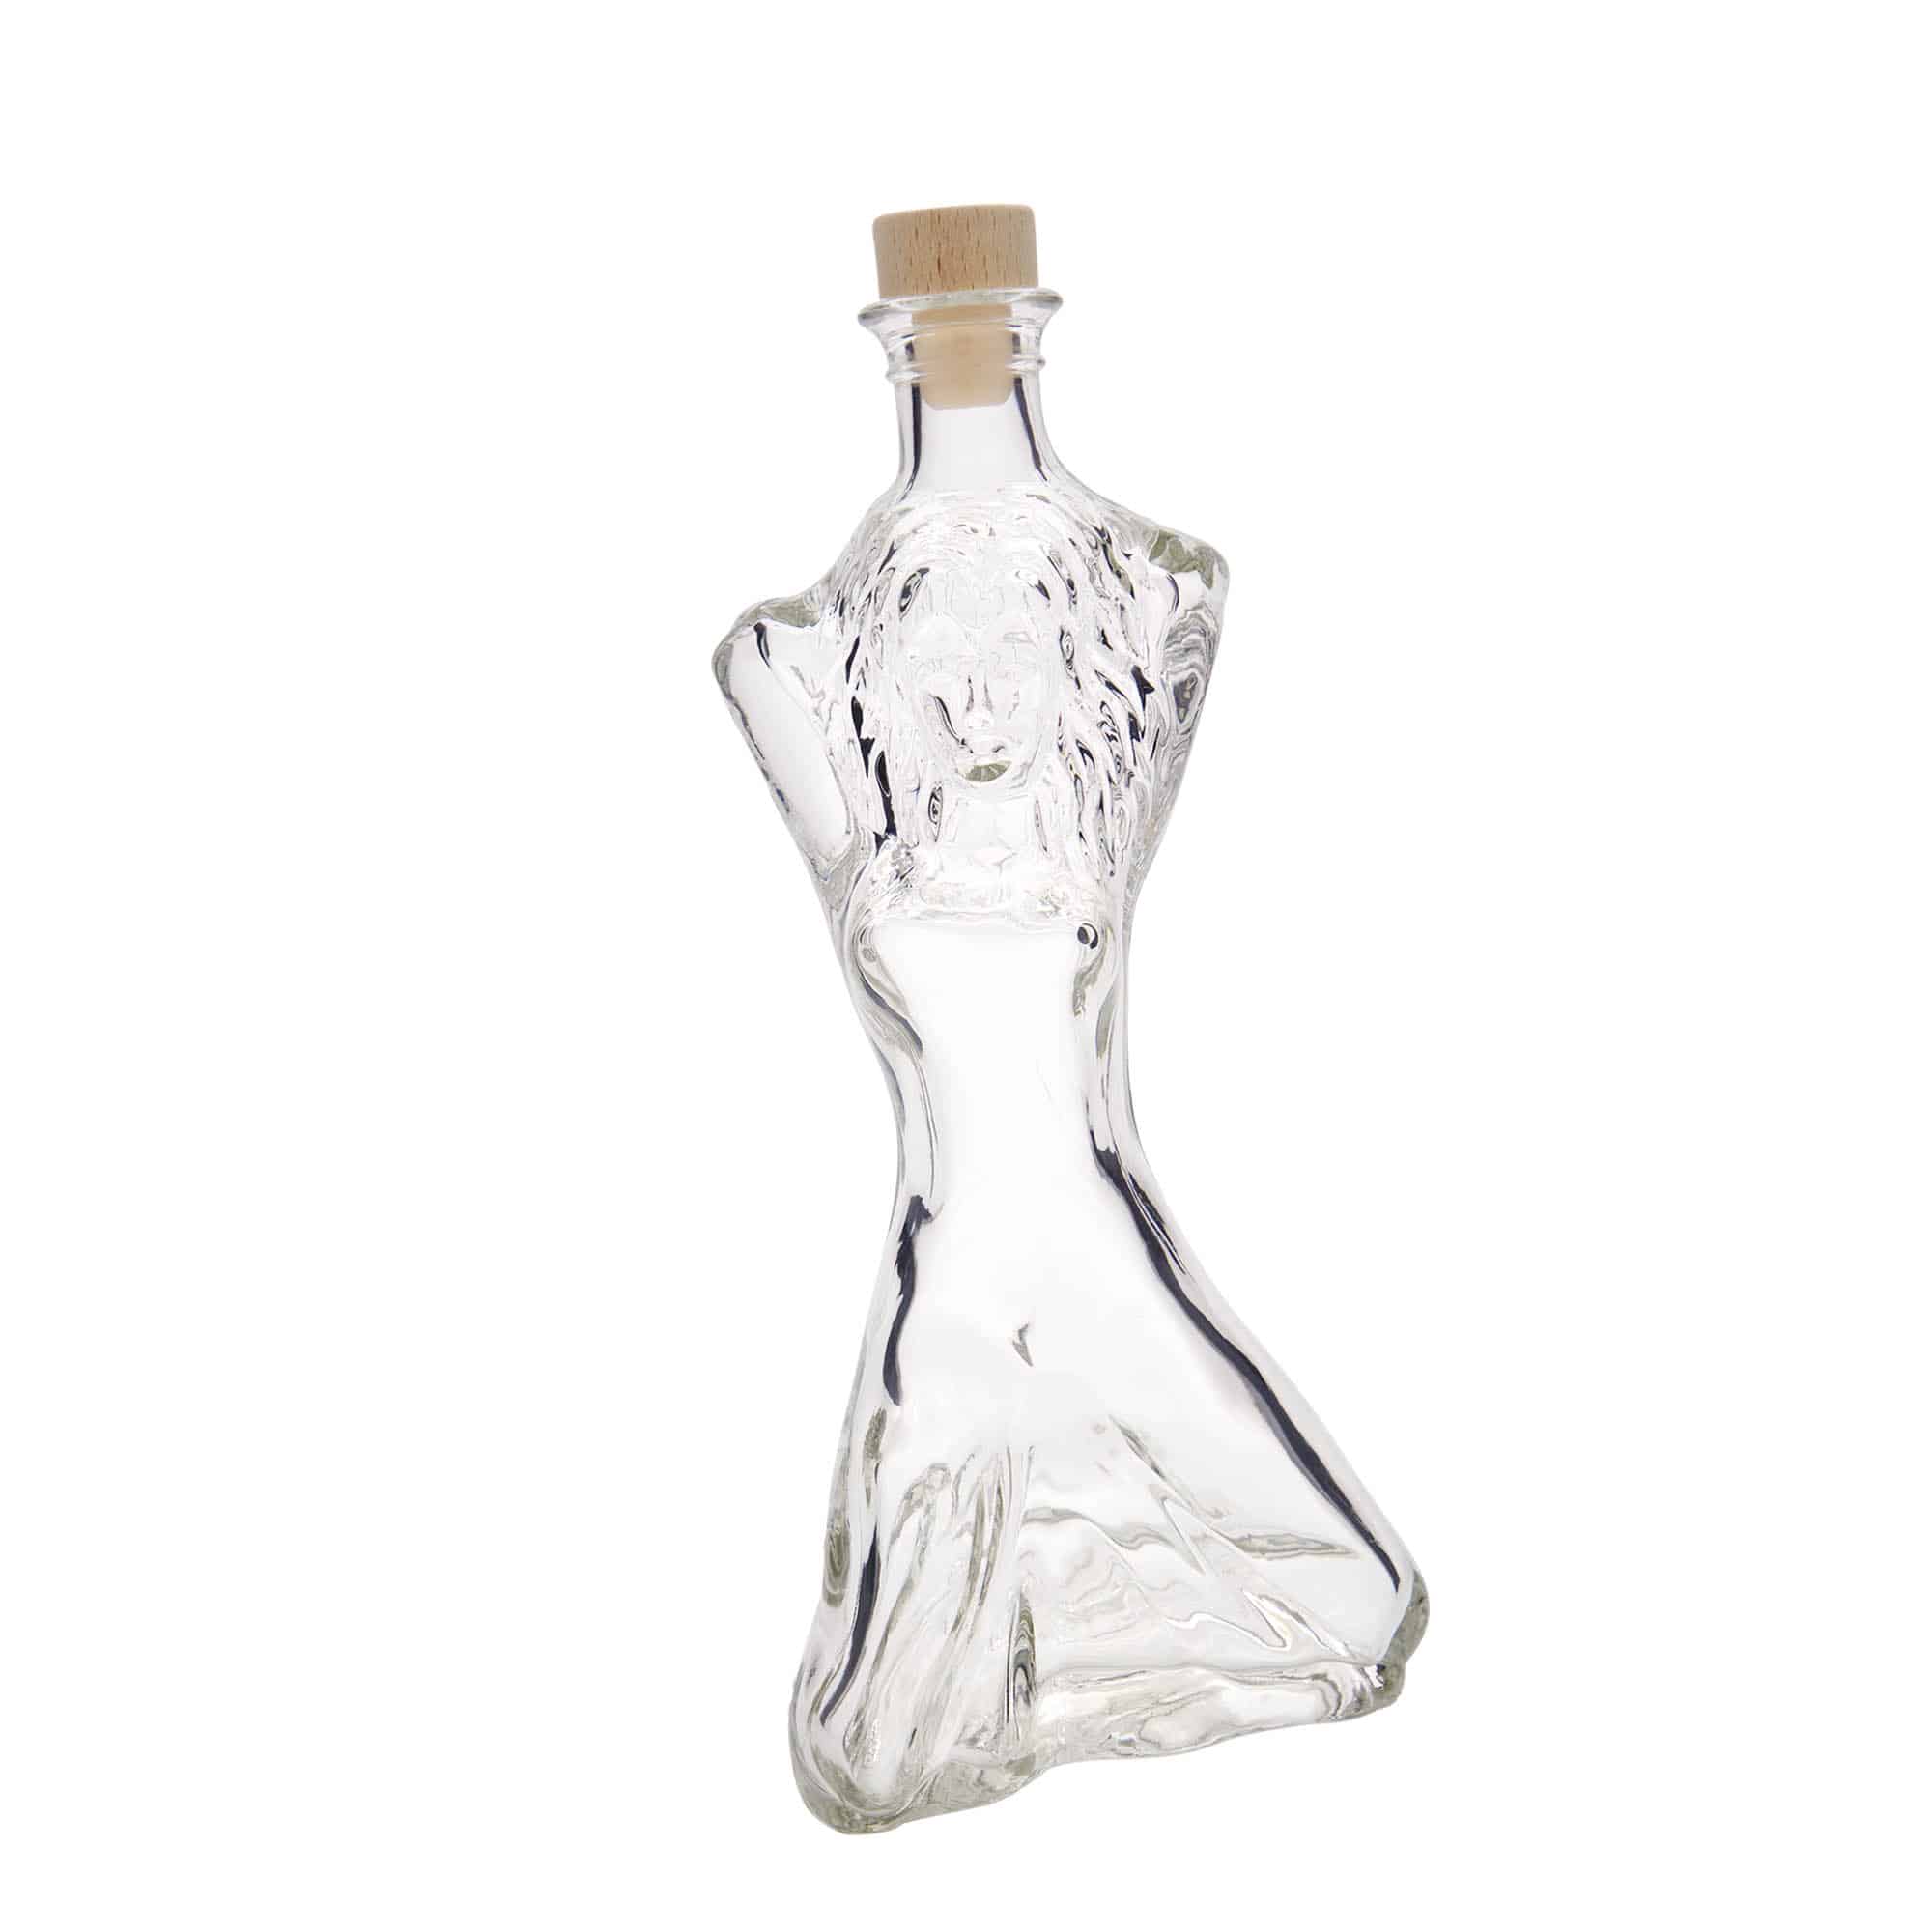 350 ml glass bottle 'Lexy', closure: cork